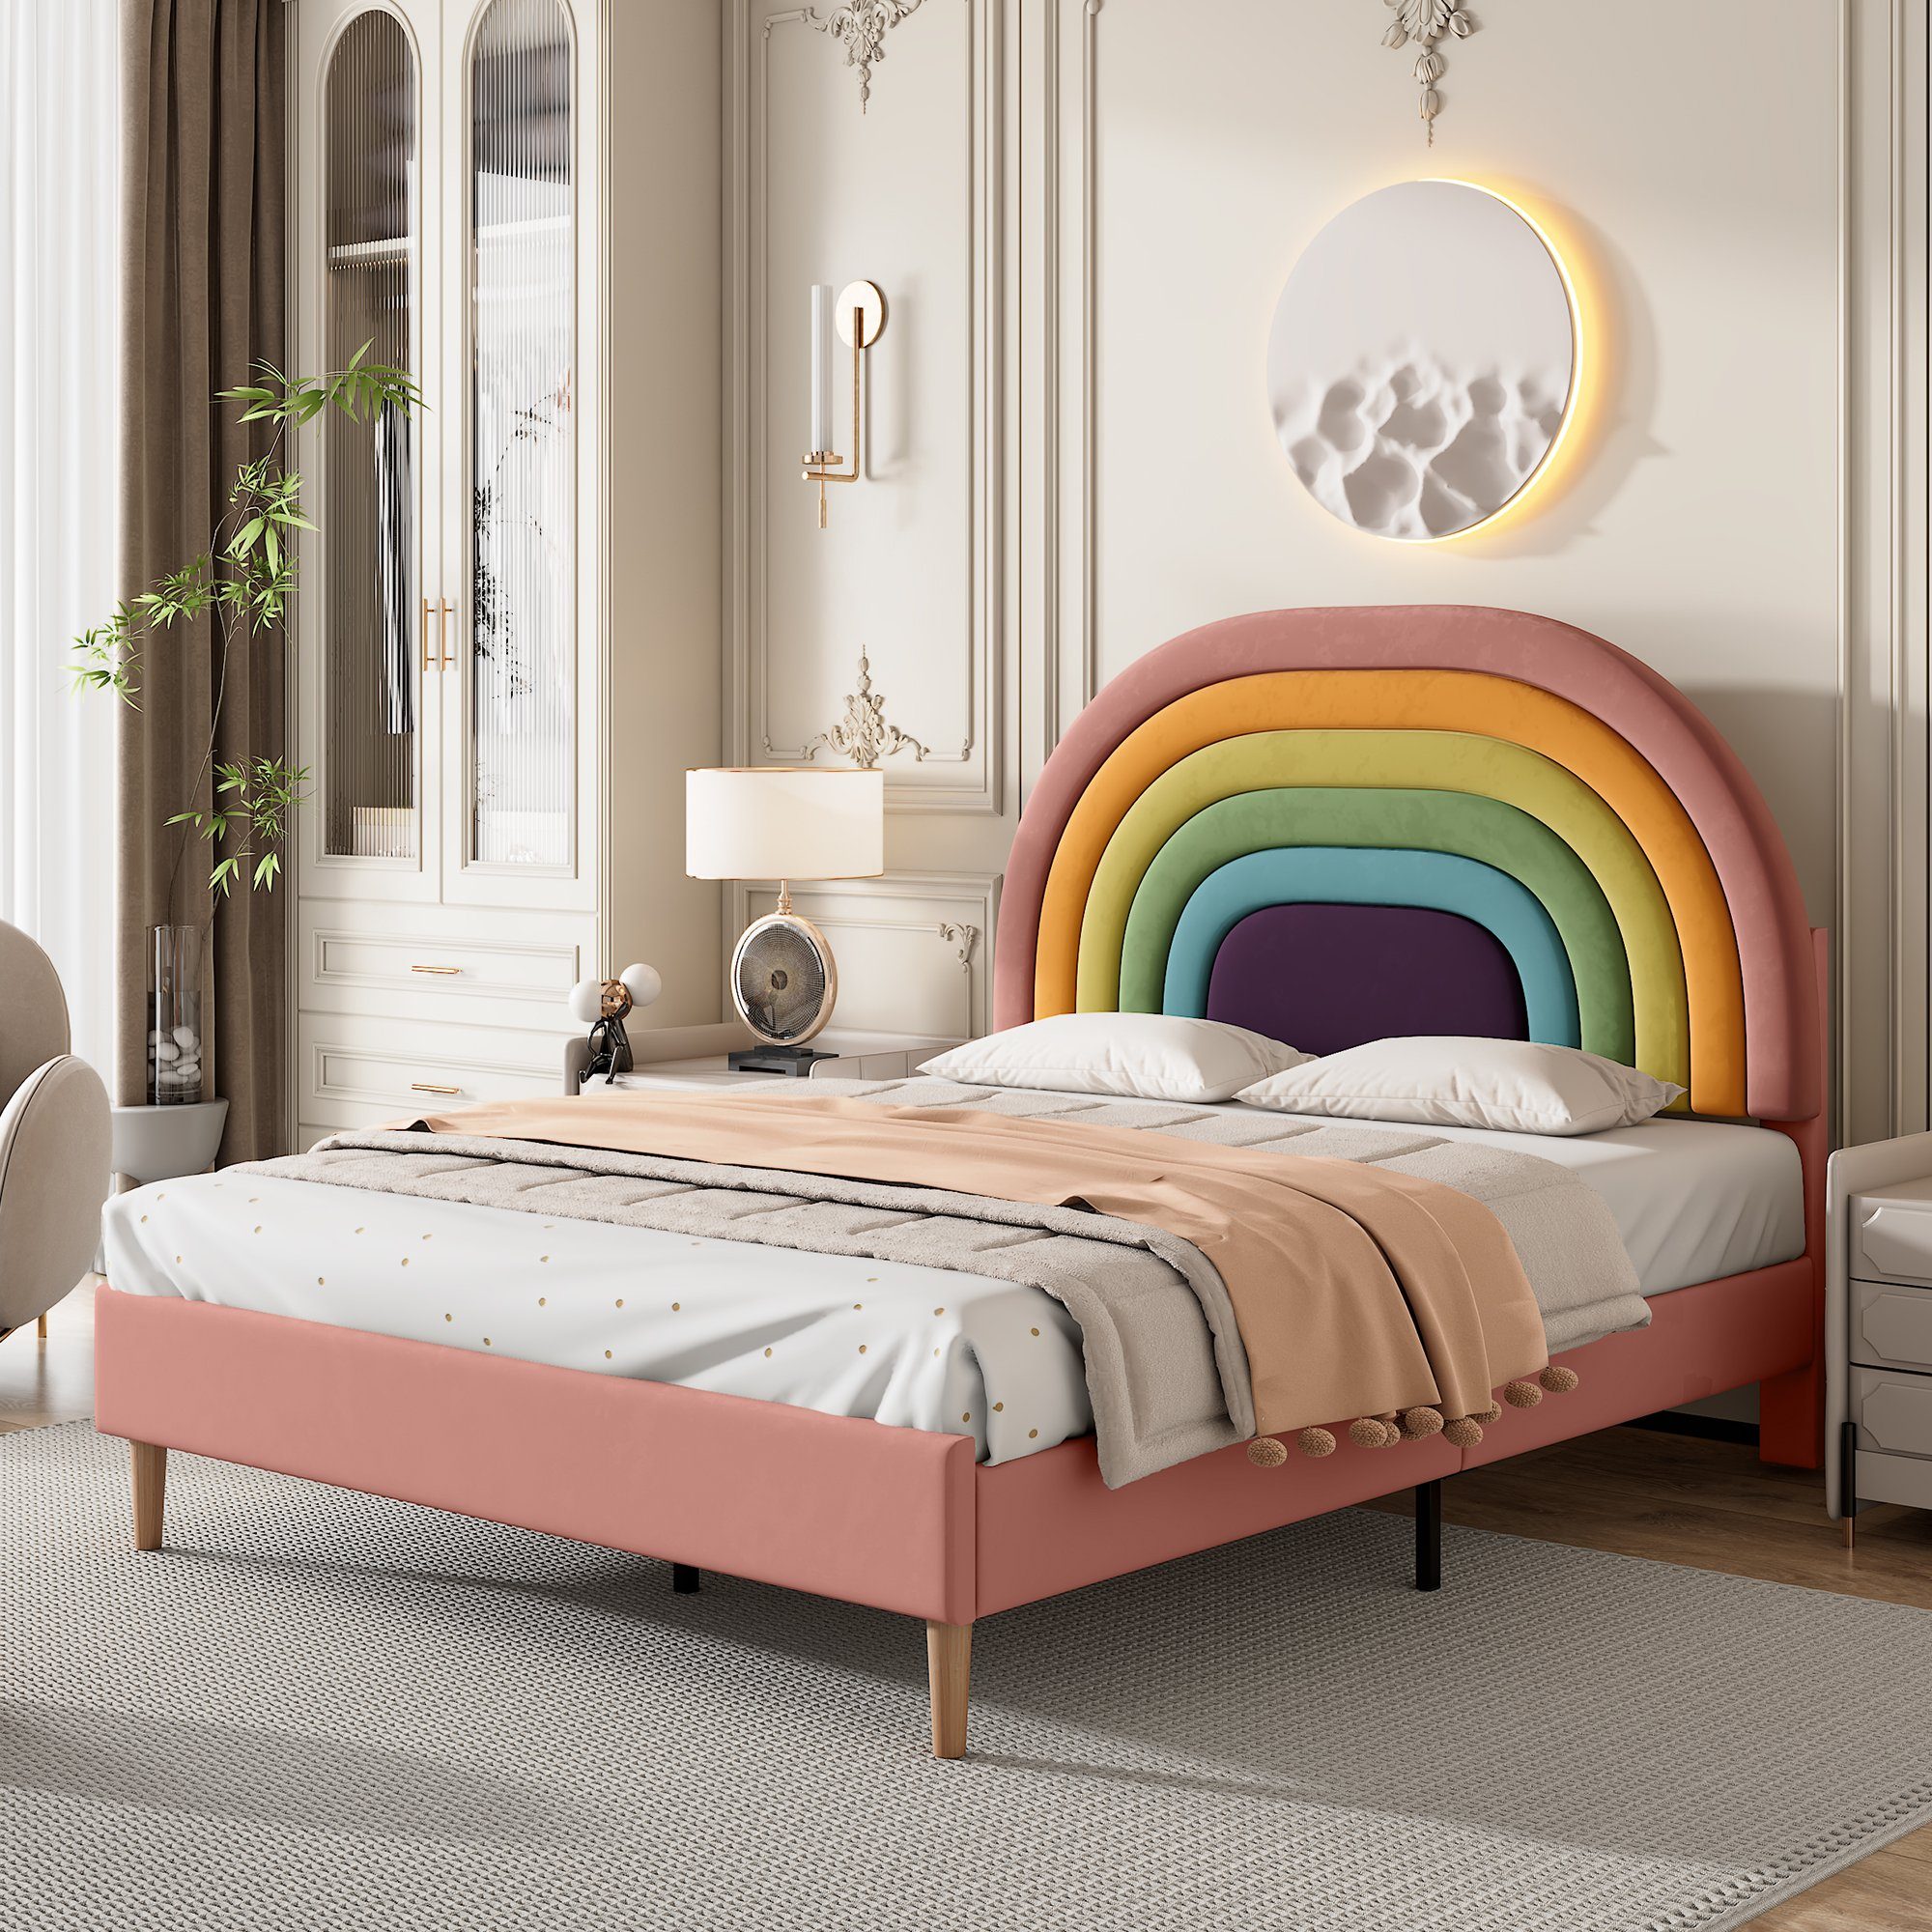 Flieks Polsterbett, Kinderbett mit verstellbarem Regenbogen-Kopfteil 140x200cm Samt rosa